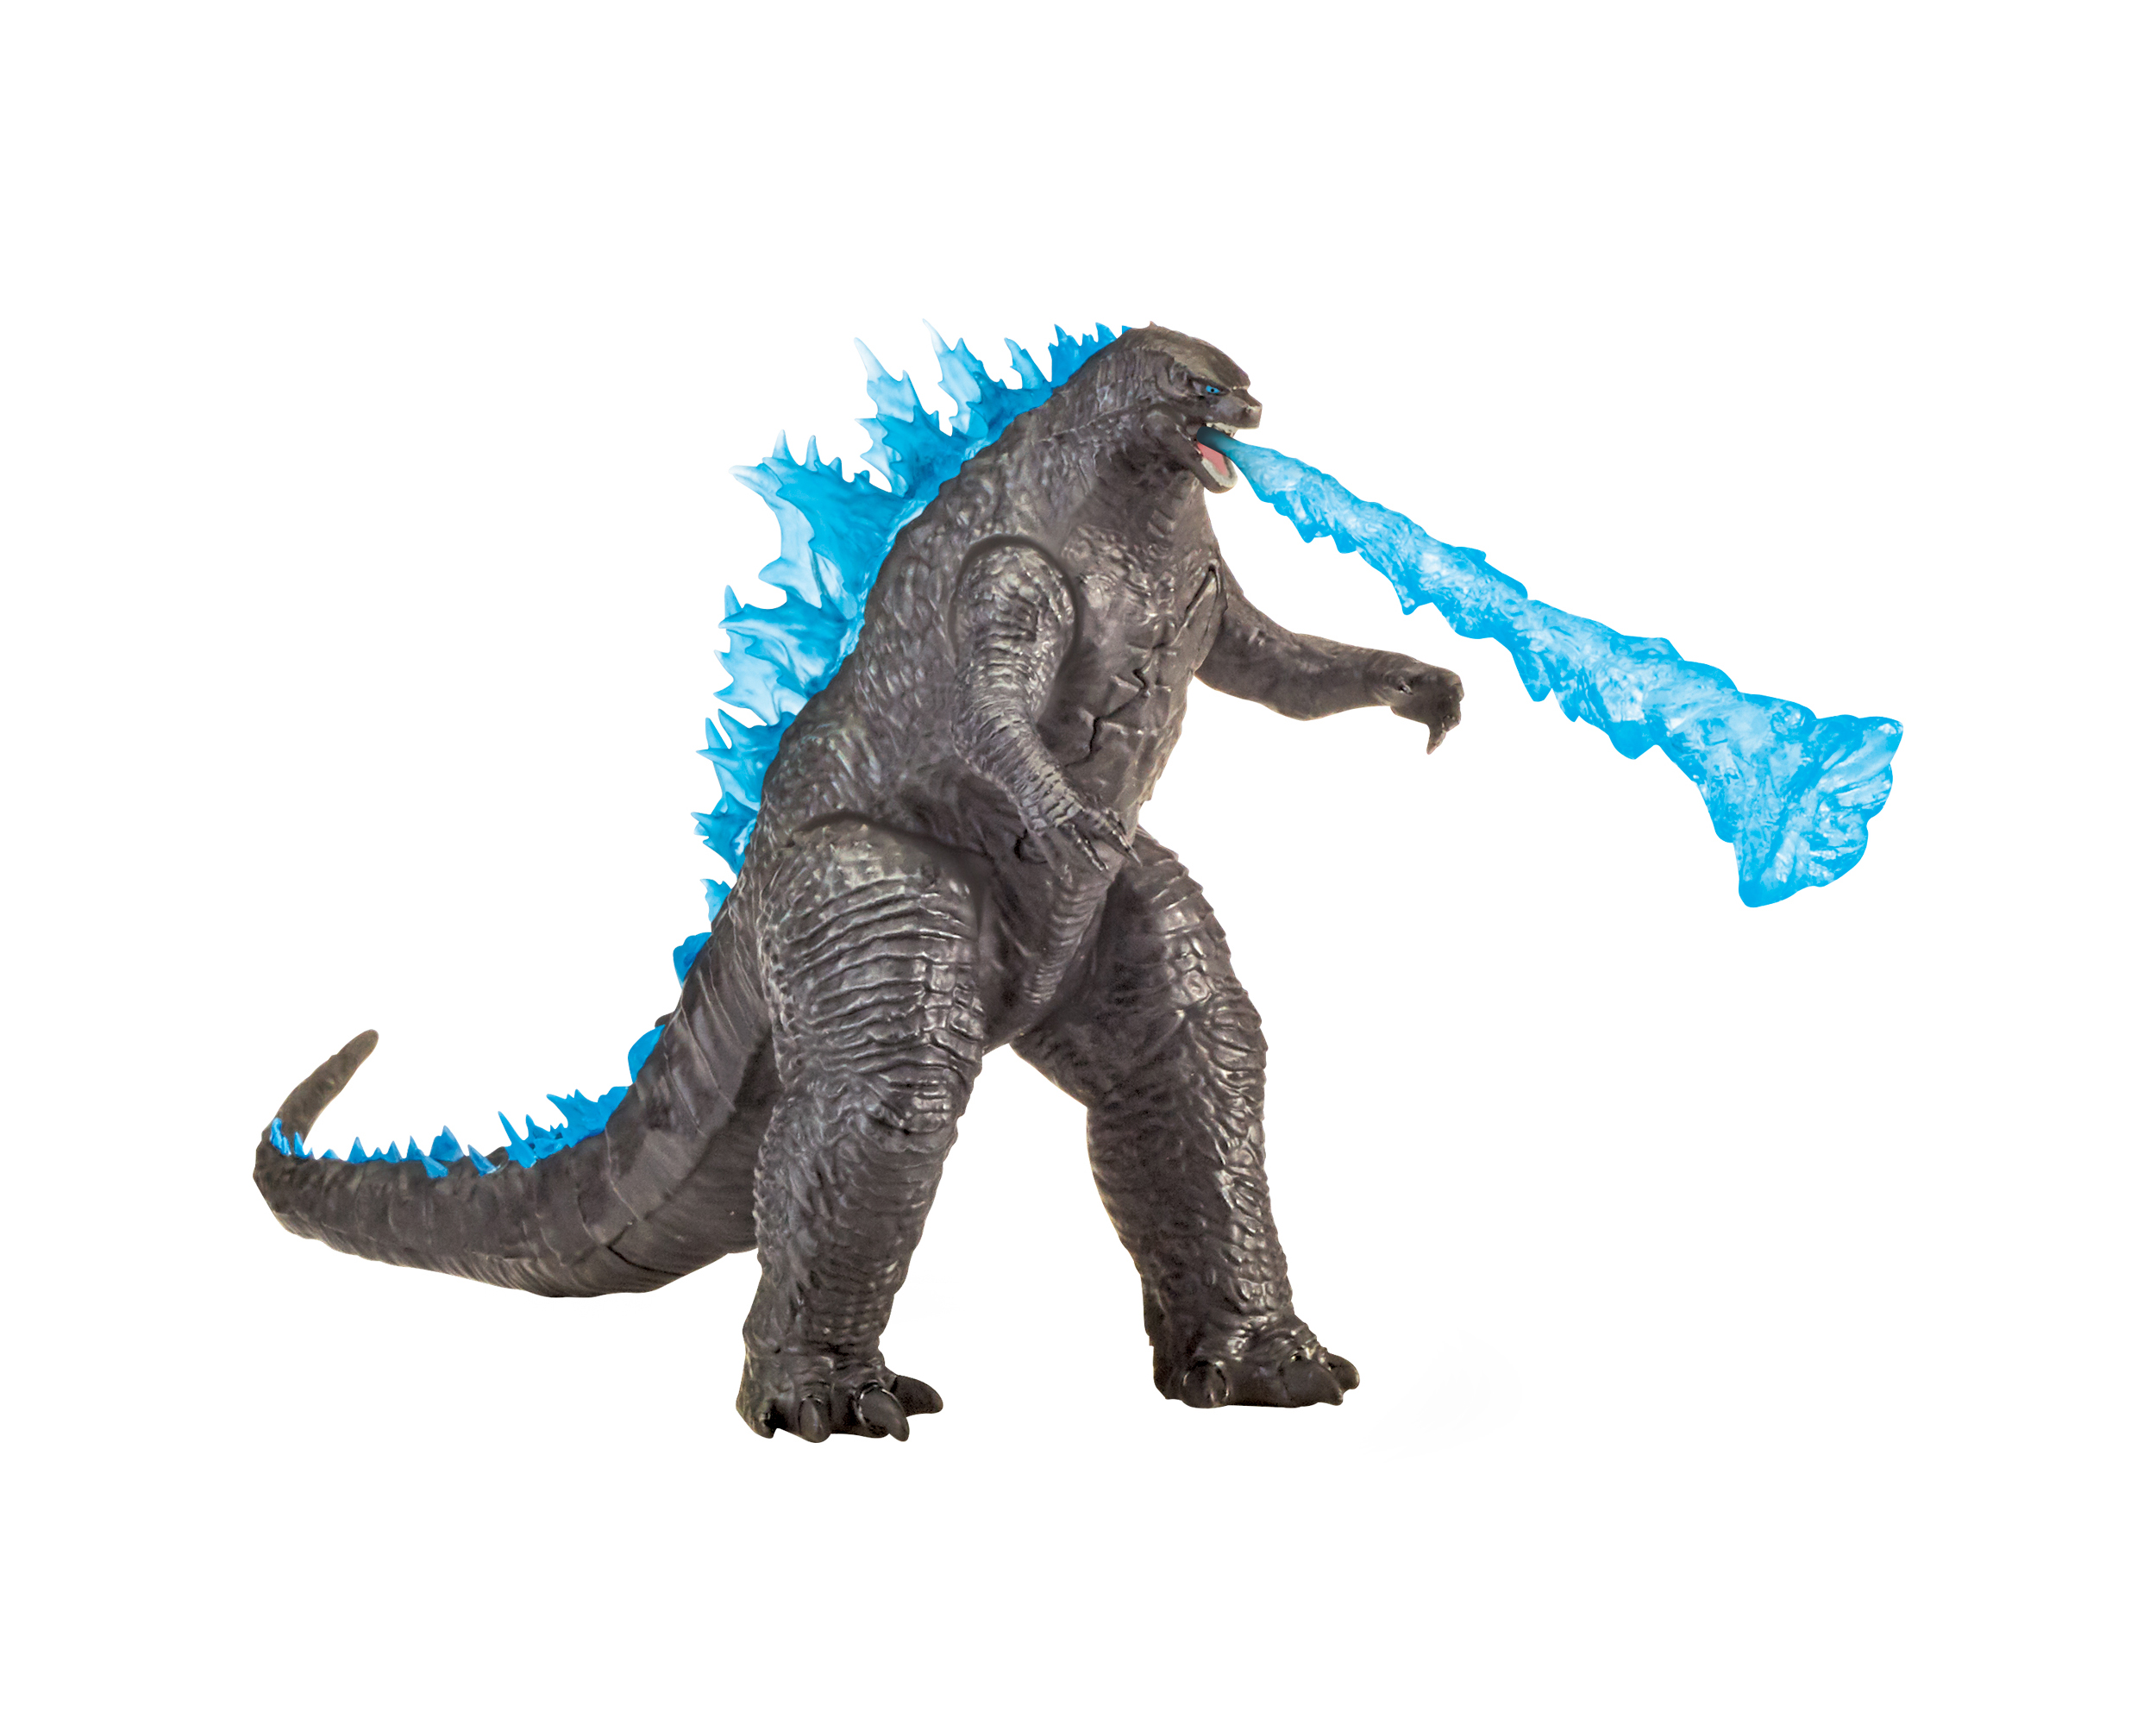 Godzilla 2017 (Mega, 20-inches tall) - Godzilla Planet of the